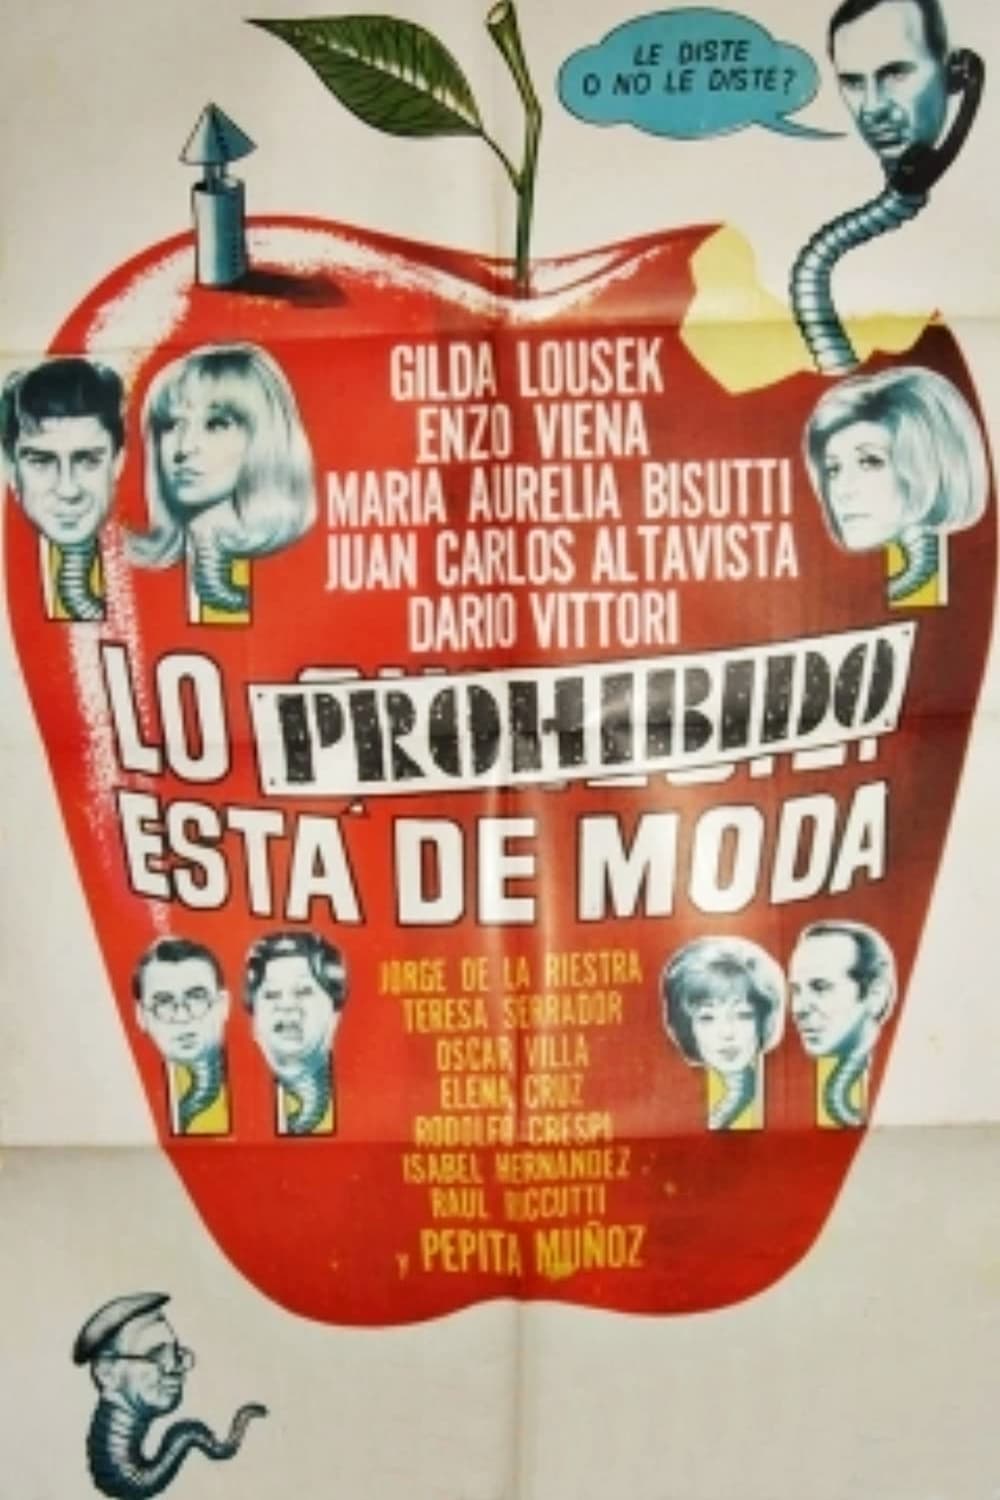 Lo prohibido está de moda (1968)